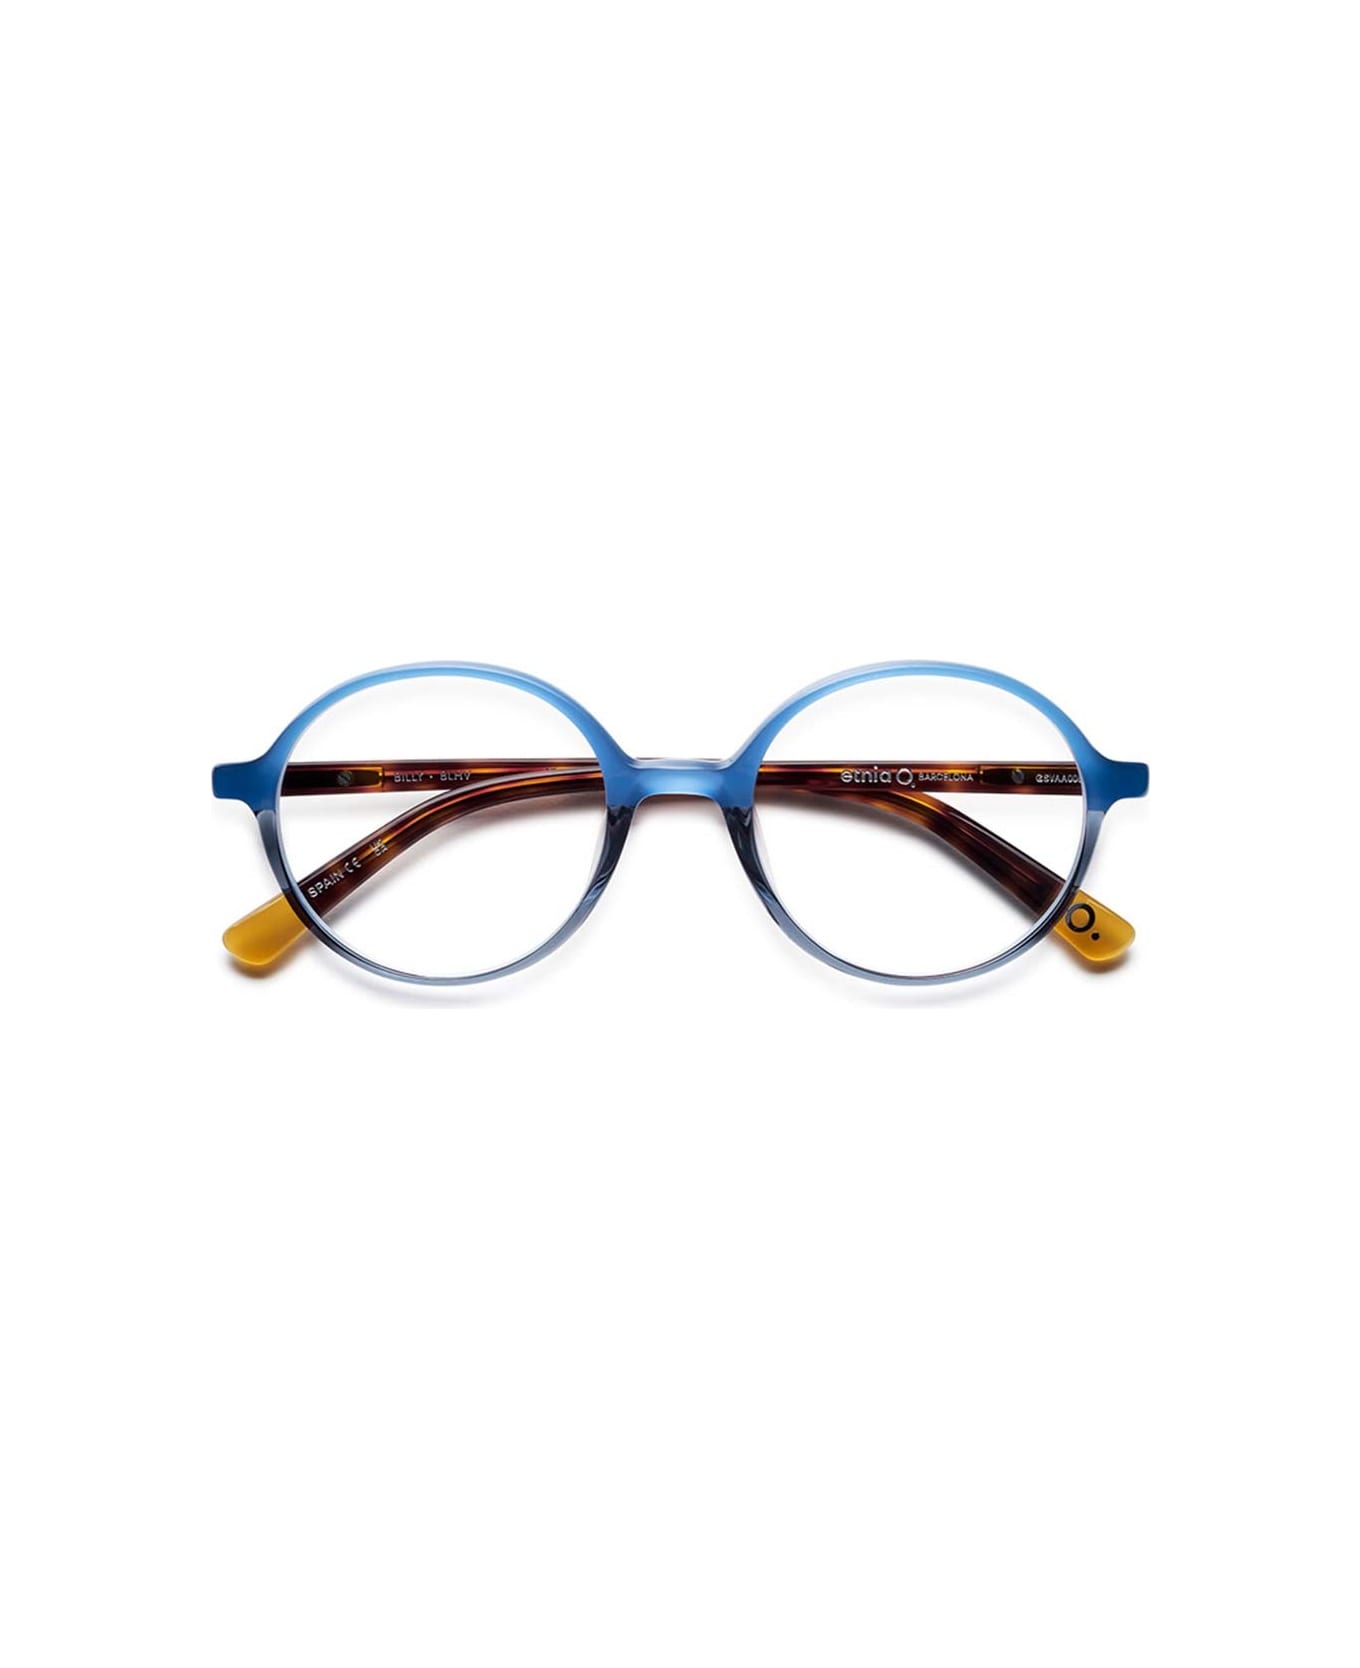 Etnia Barcelona Eyewear - Havana e blu アイウェア